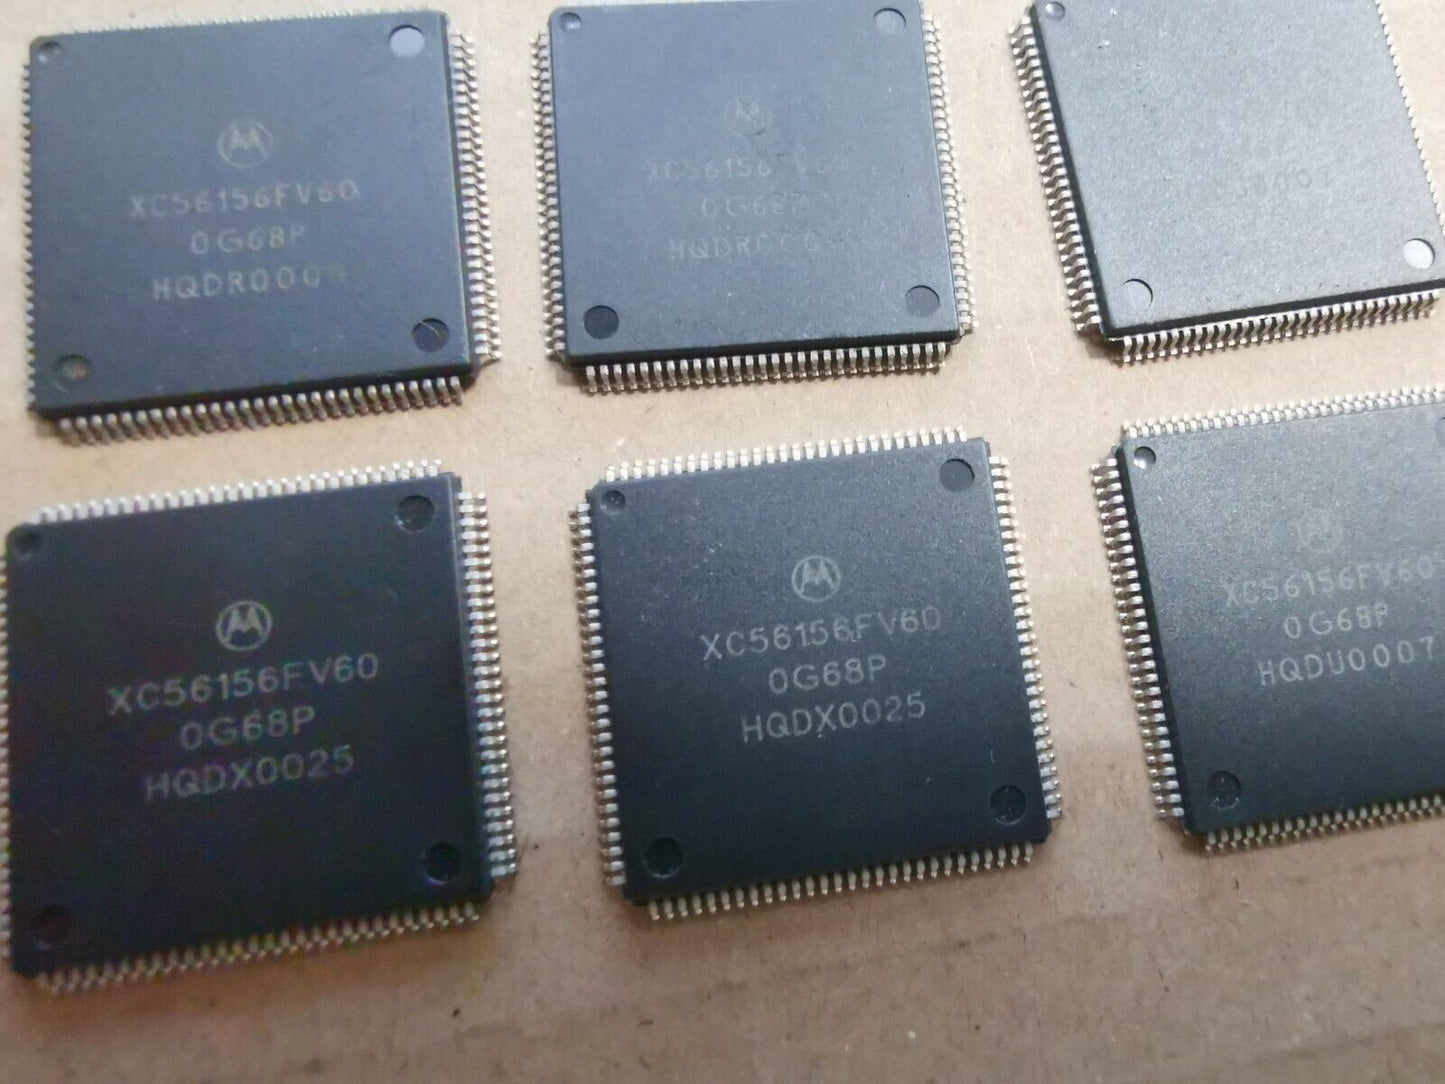 8pcs Genuine XC56156FV60 24 Bit Motorola DSP Digital Signal Processor